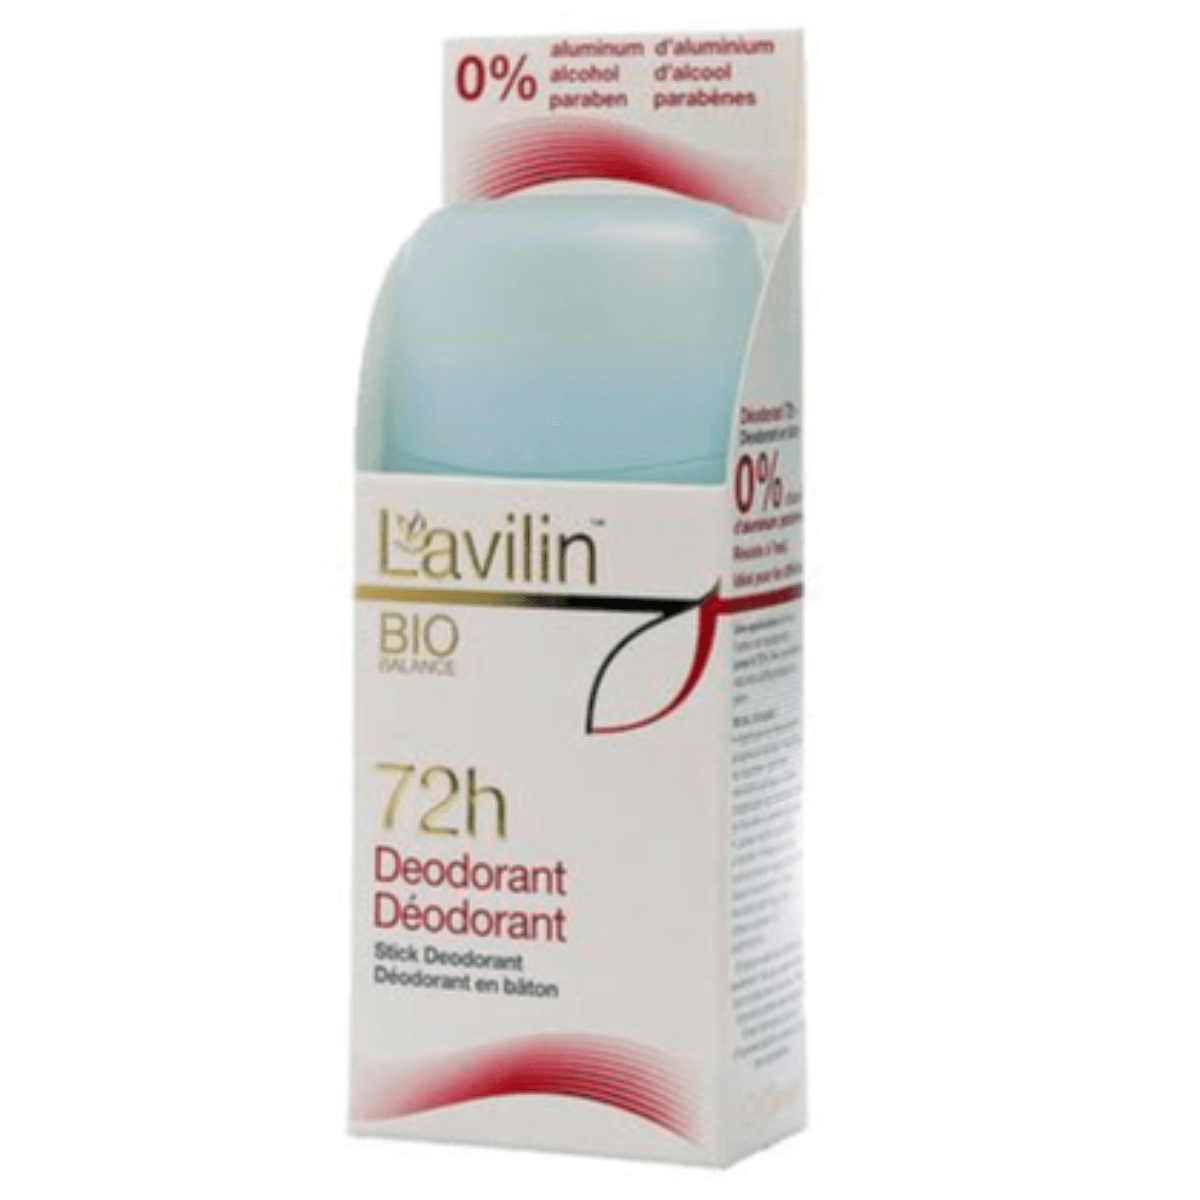 Lavilin Bio 48 hours Deodorant Deodorant at Village Vitamin Store